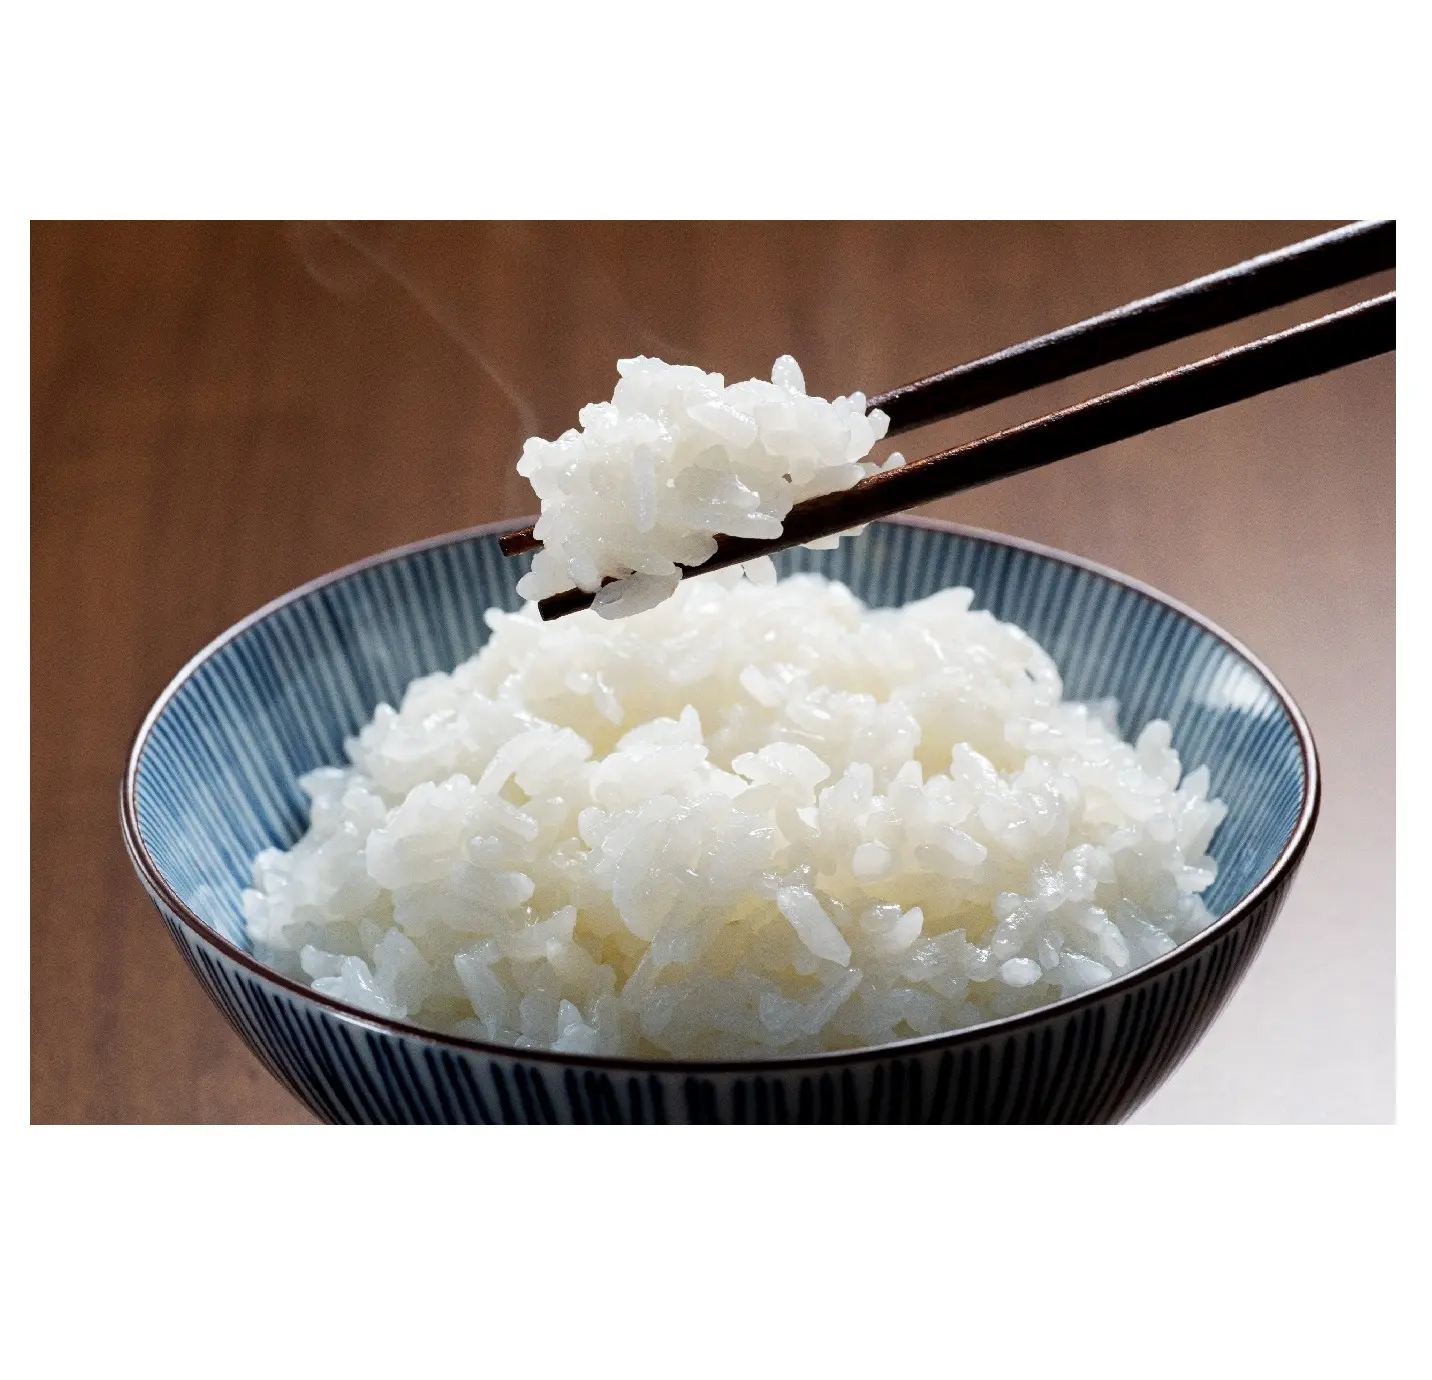 Japon baharat kaliteli toplu satış Online toptan pirinç tedarikçisi